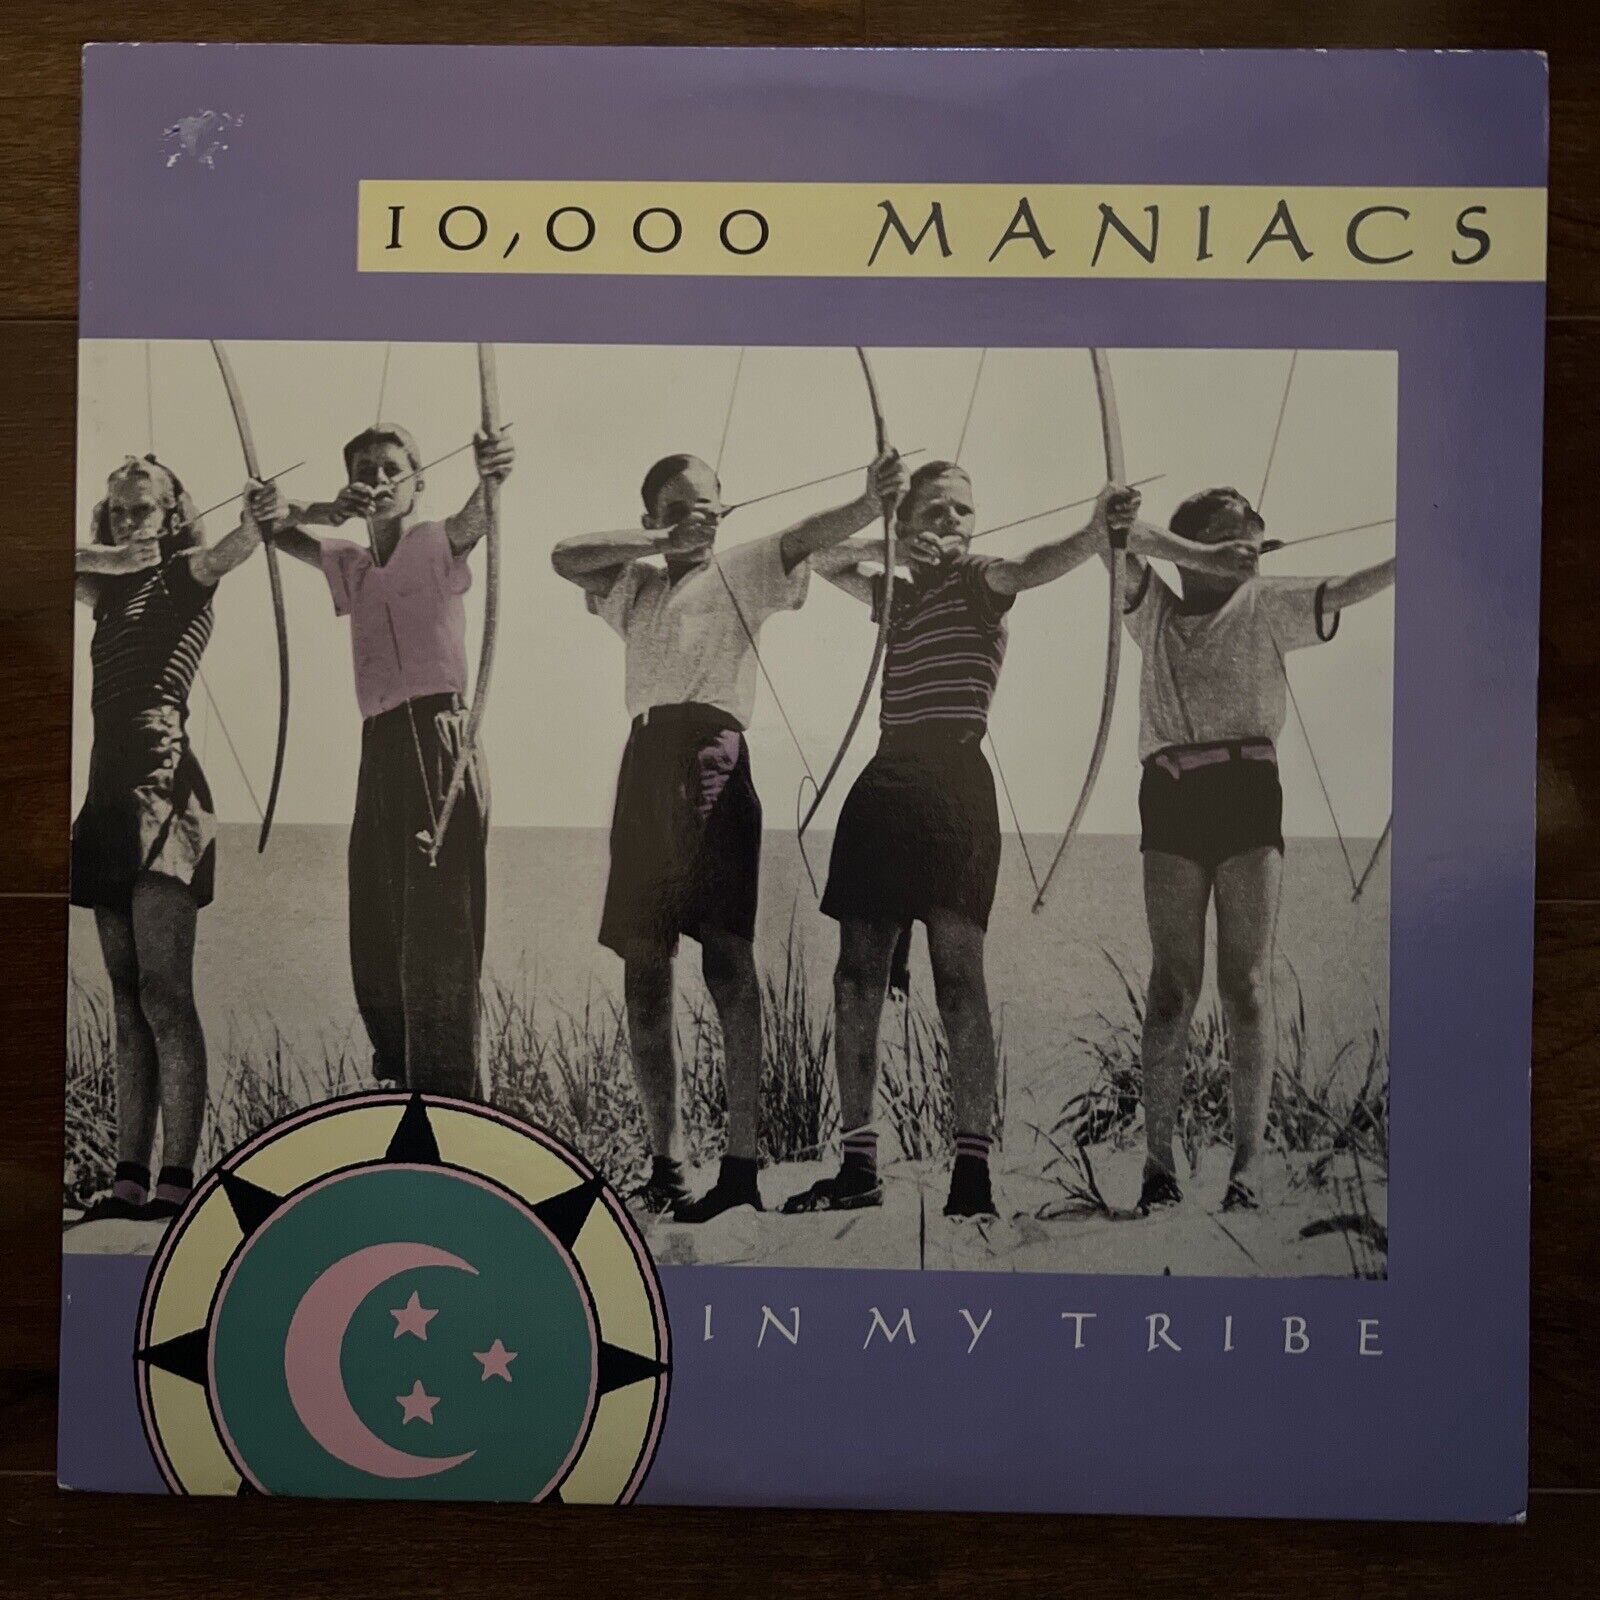 10,000 Maniacs  In My Tribe  1987  LP Vinyl Record Album 9 E1-60738 EX